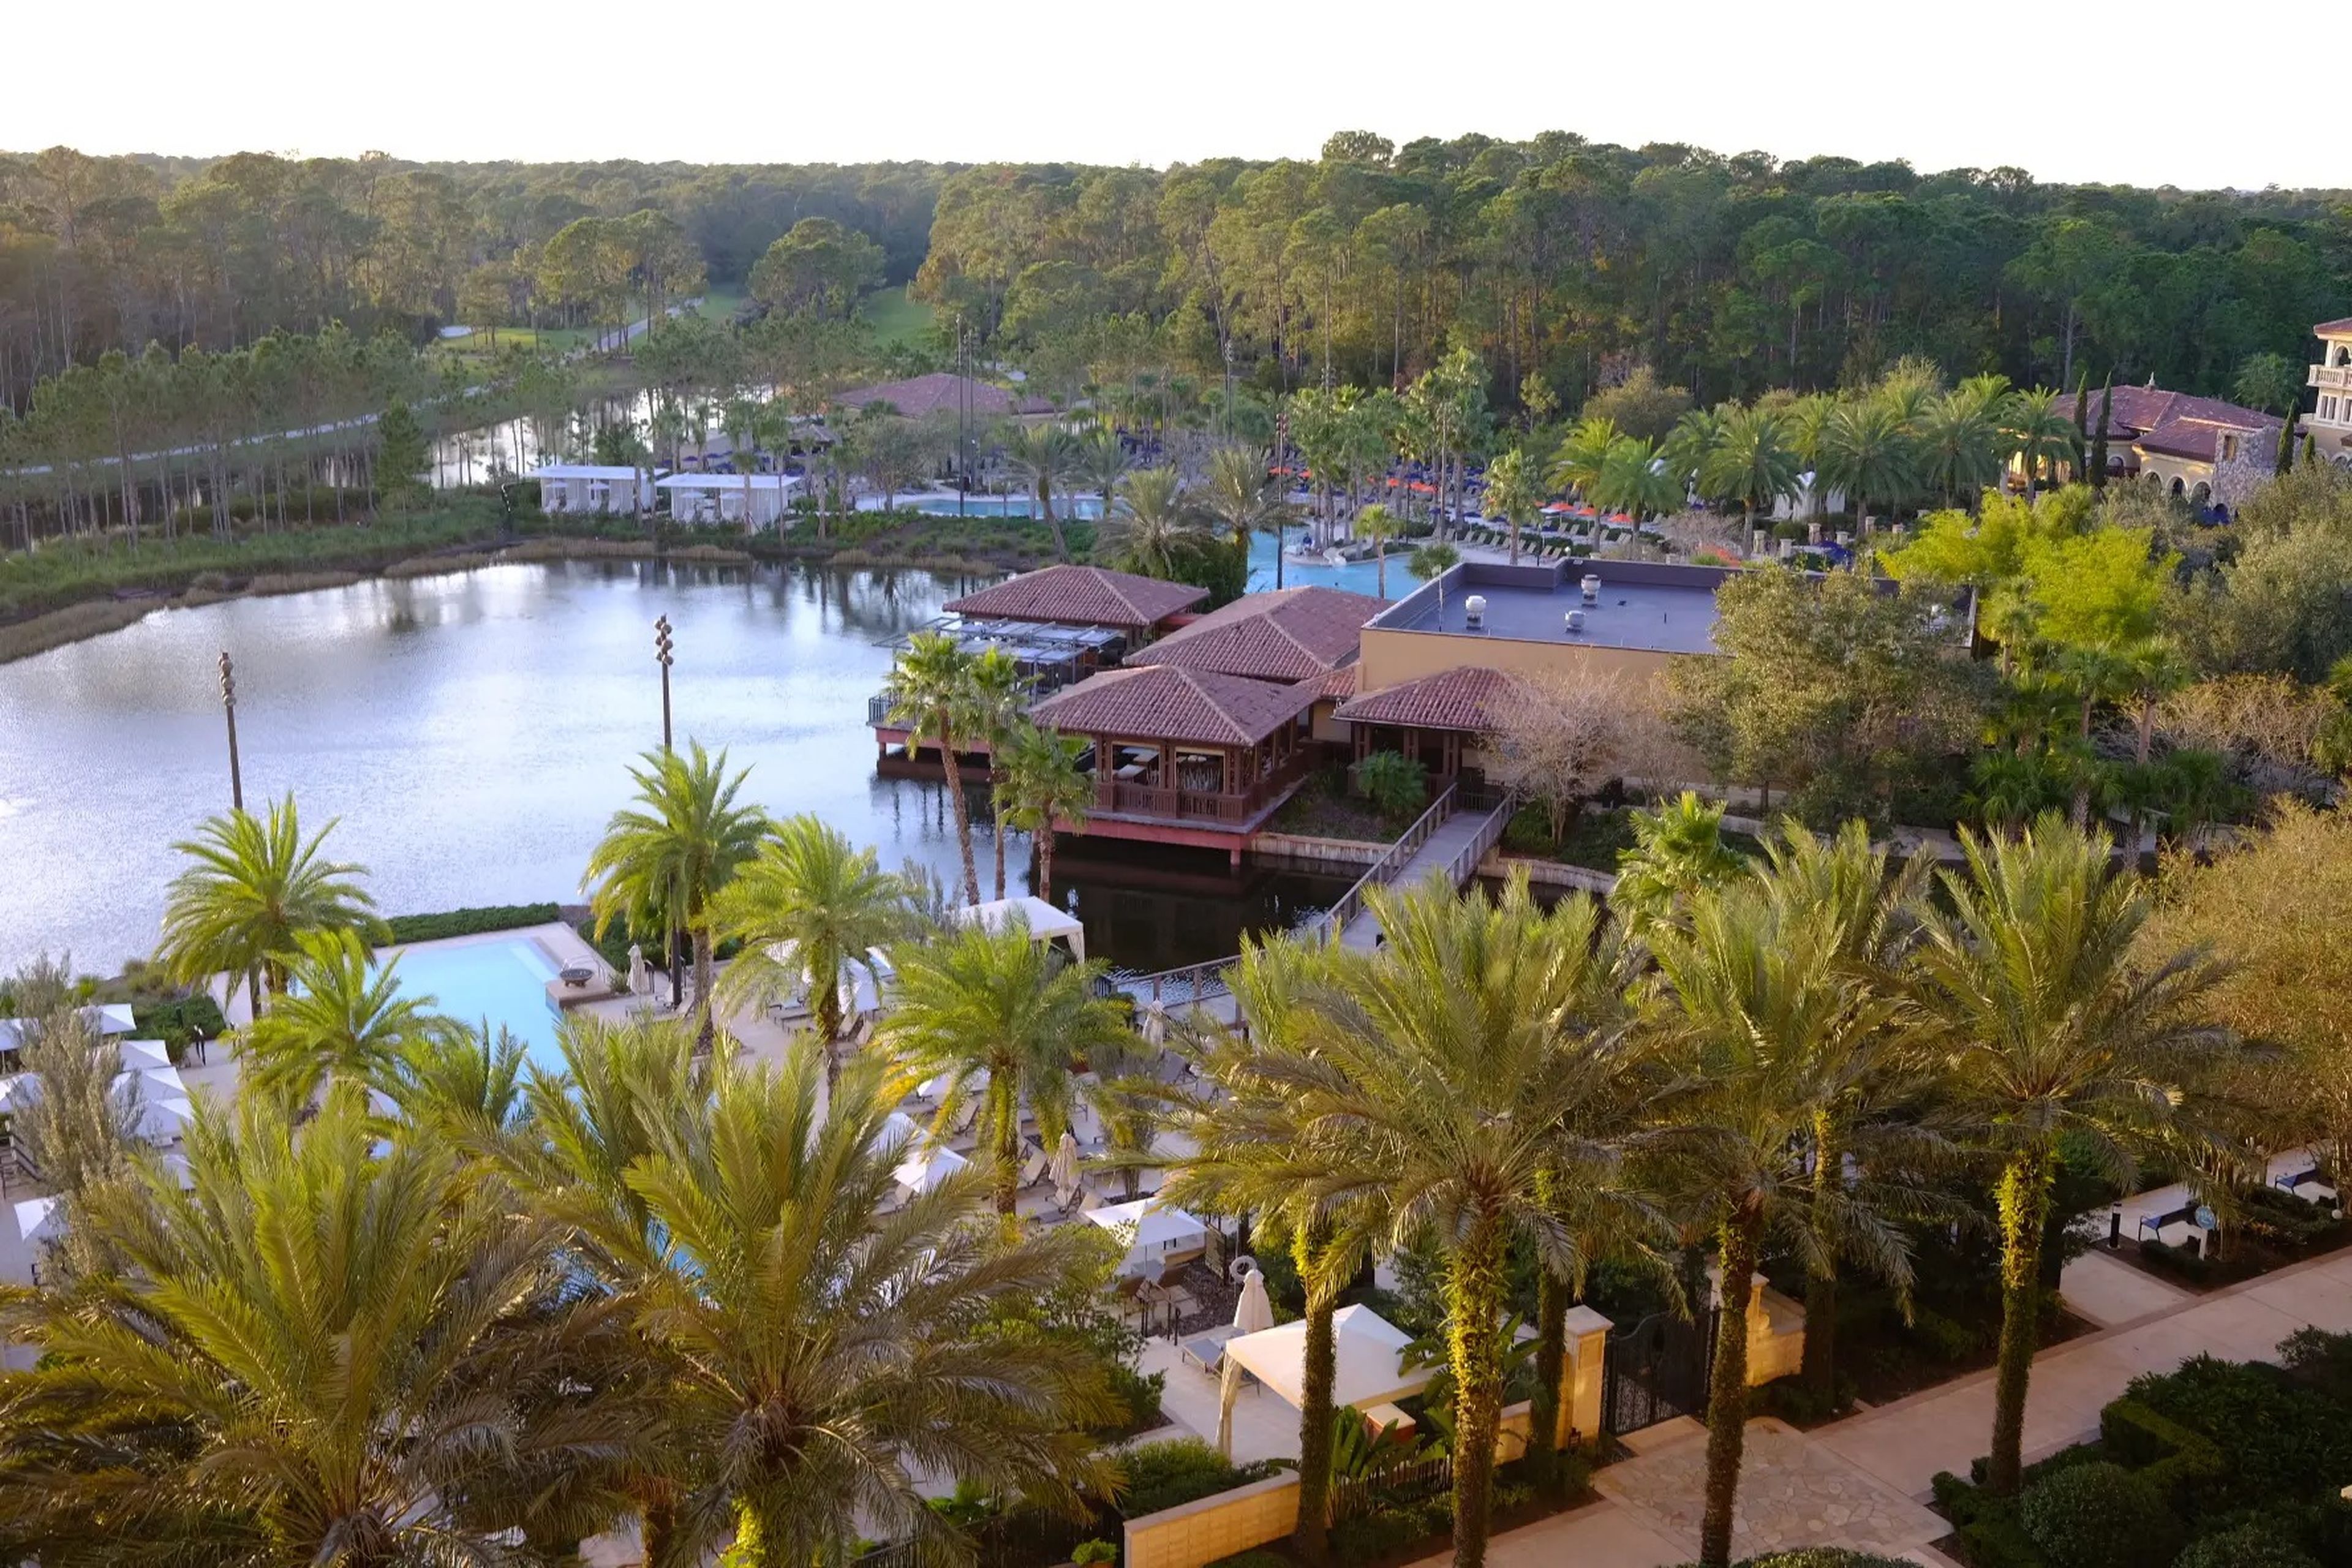 View from Disney World Four Seasons balcony of Disney